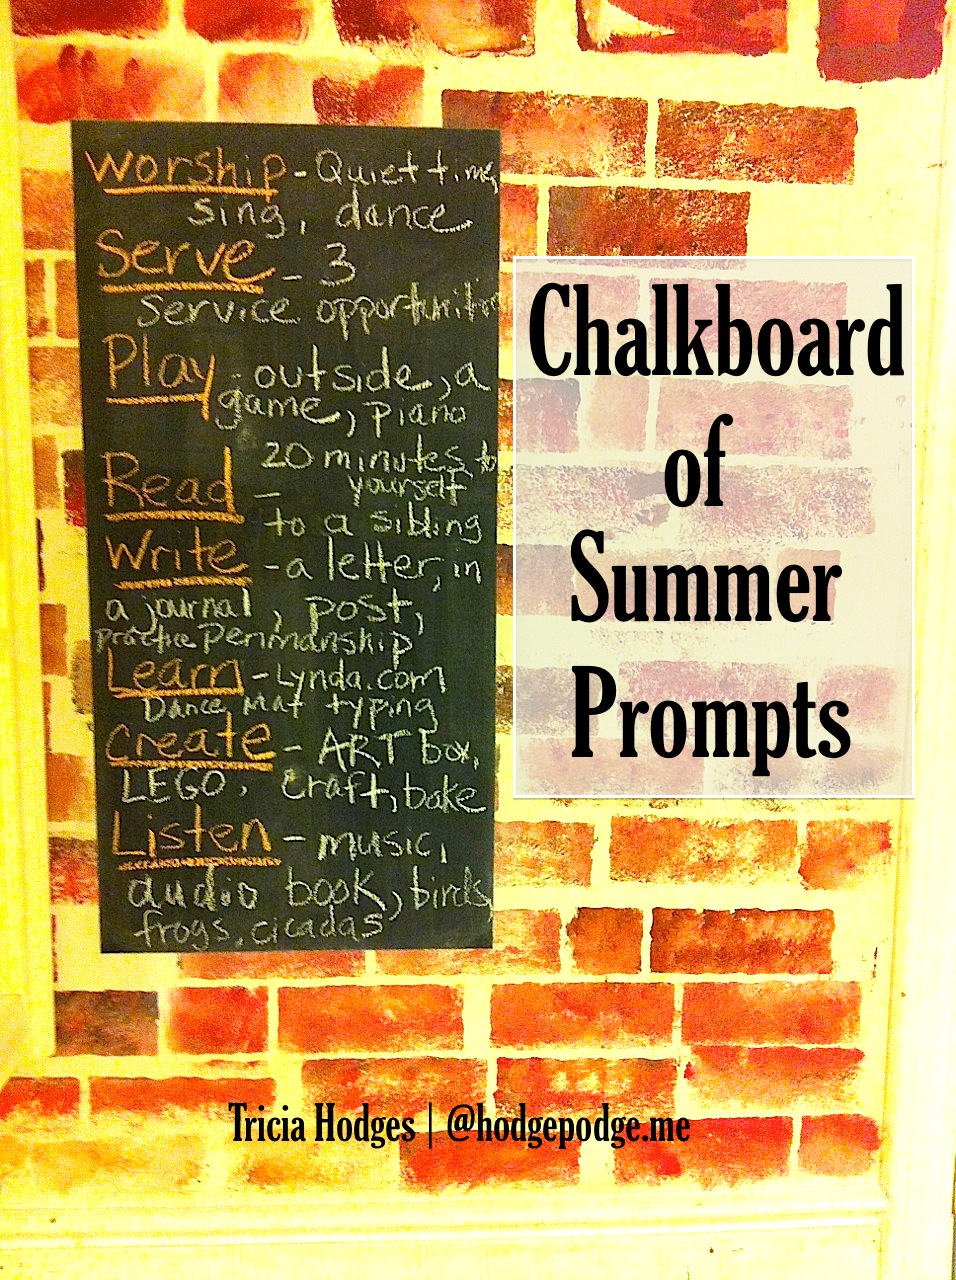 Chalkboard of Summer Prompts